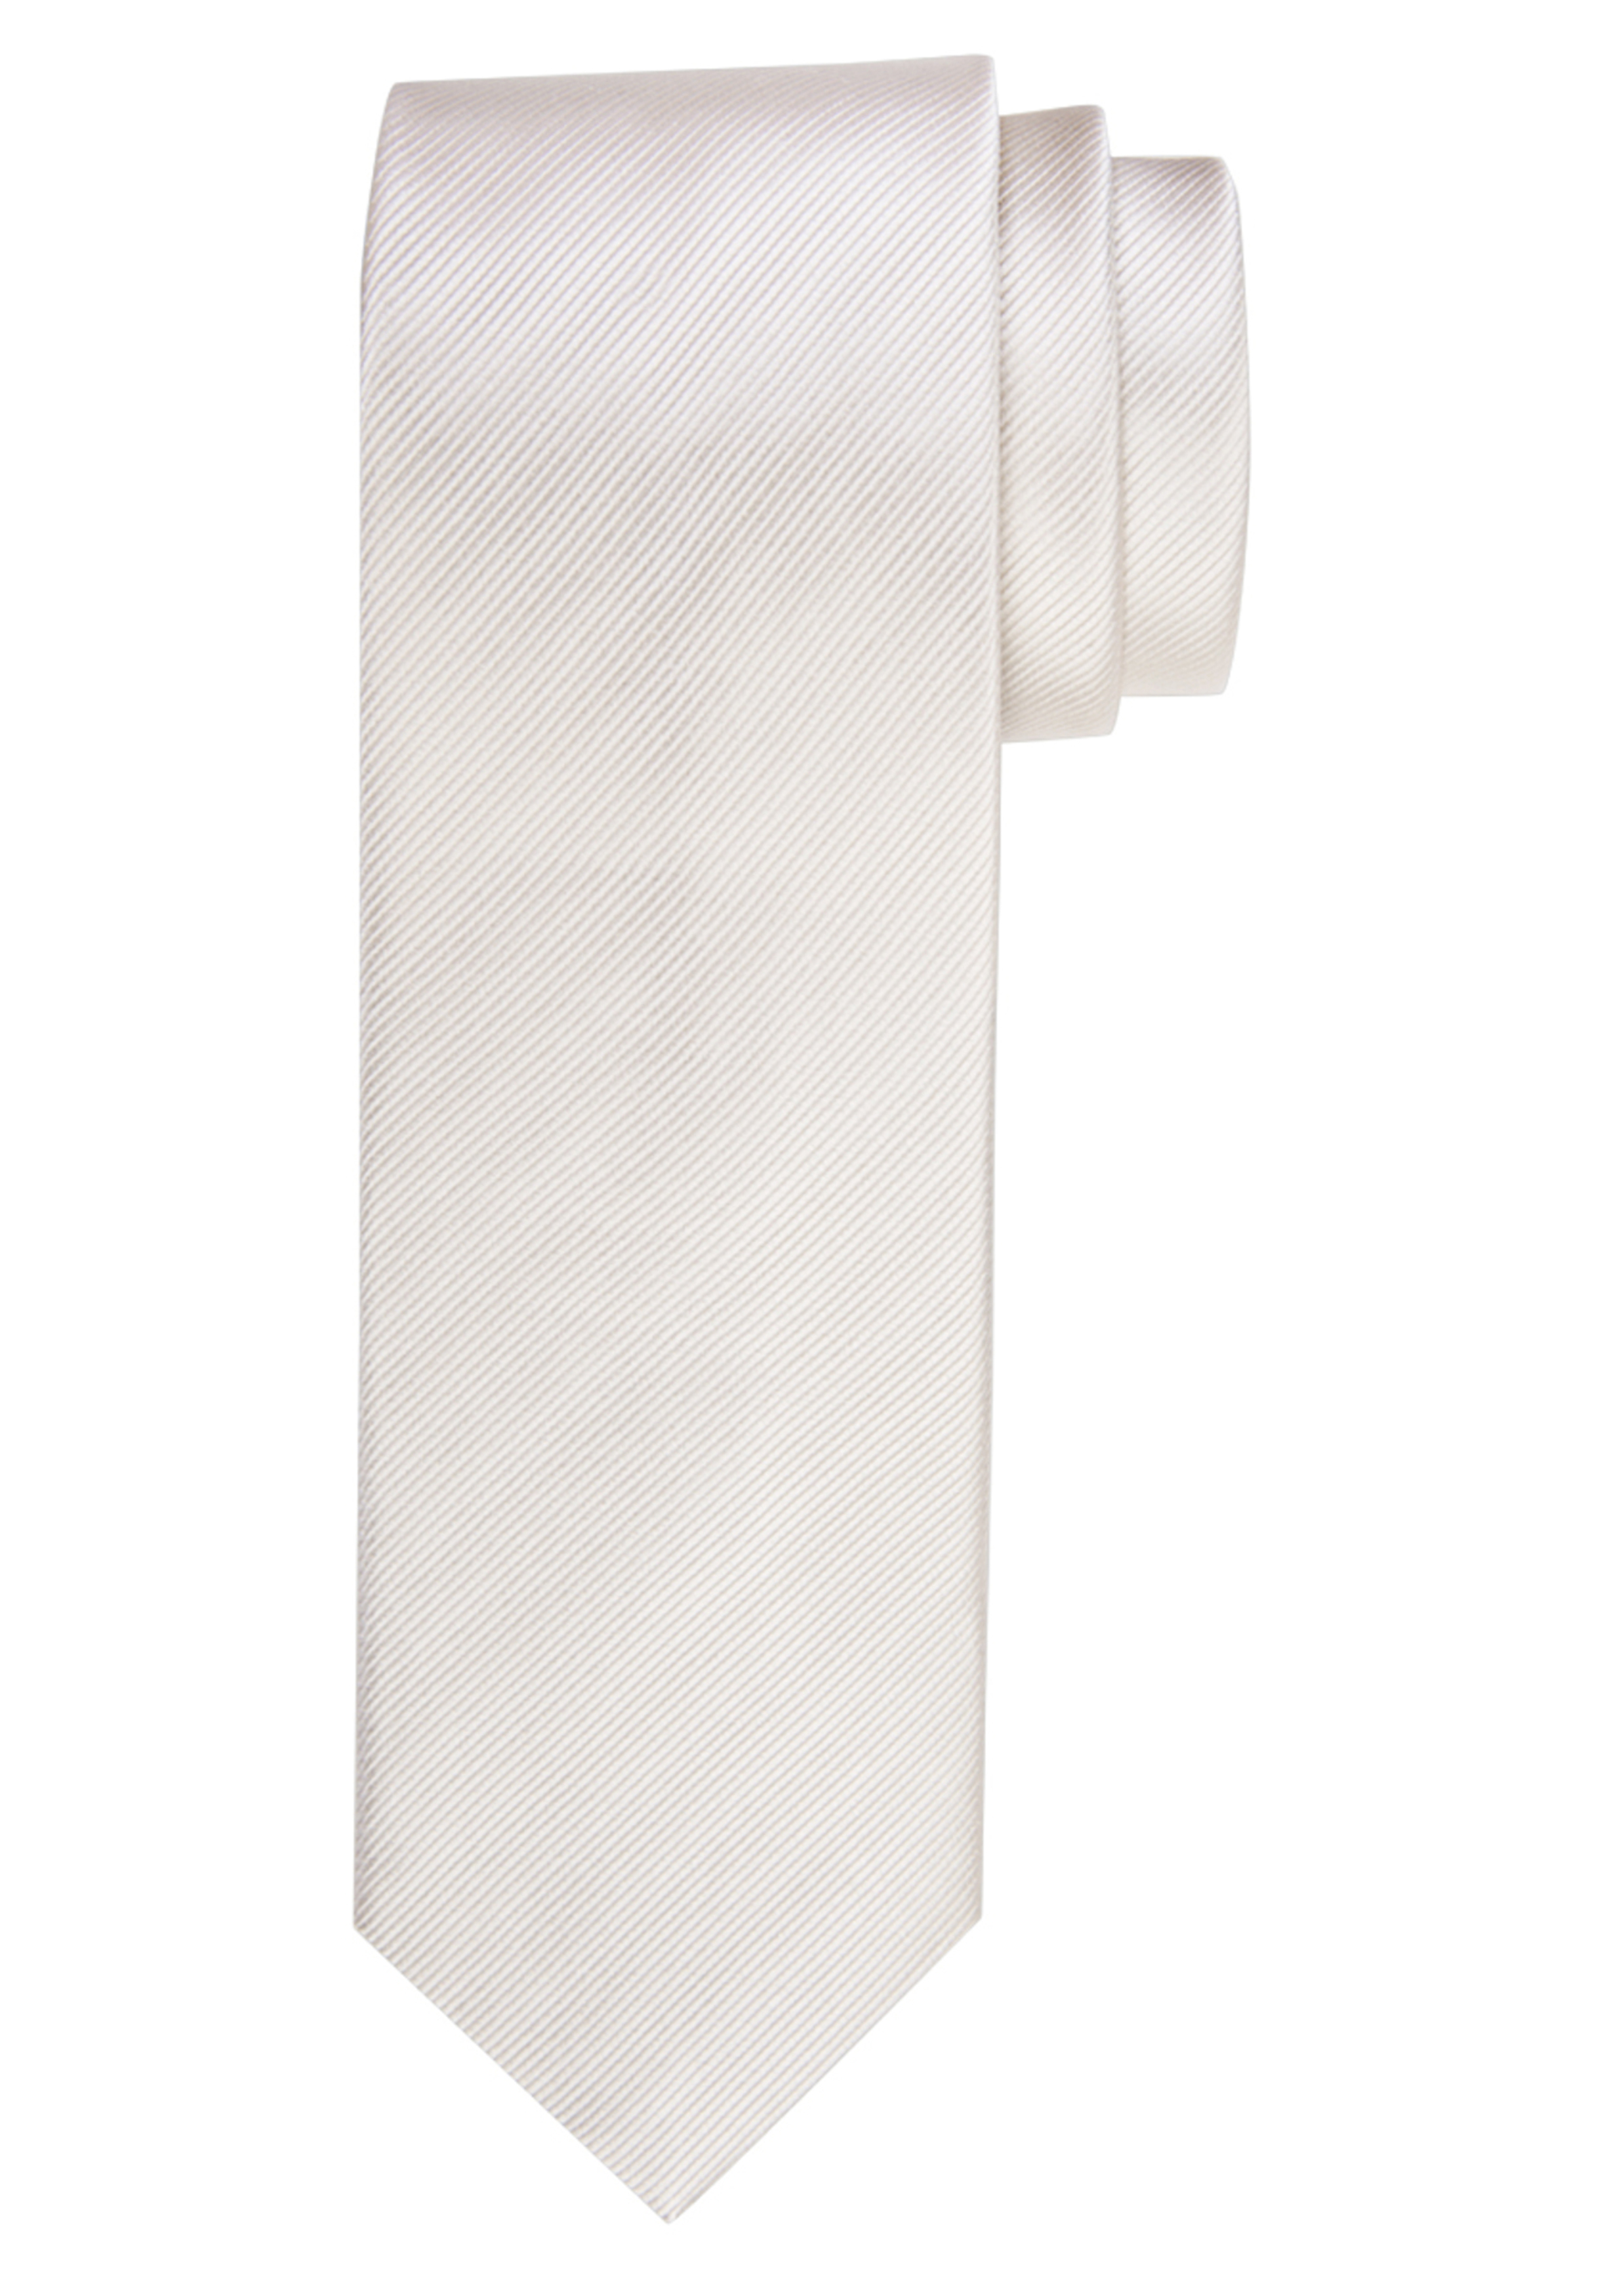 Profuomo stropdas, zijde, off-white - Shop nieuwste